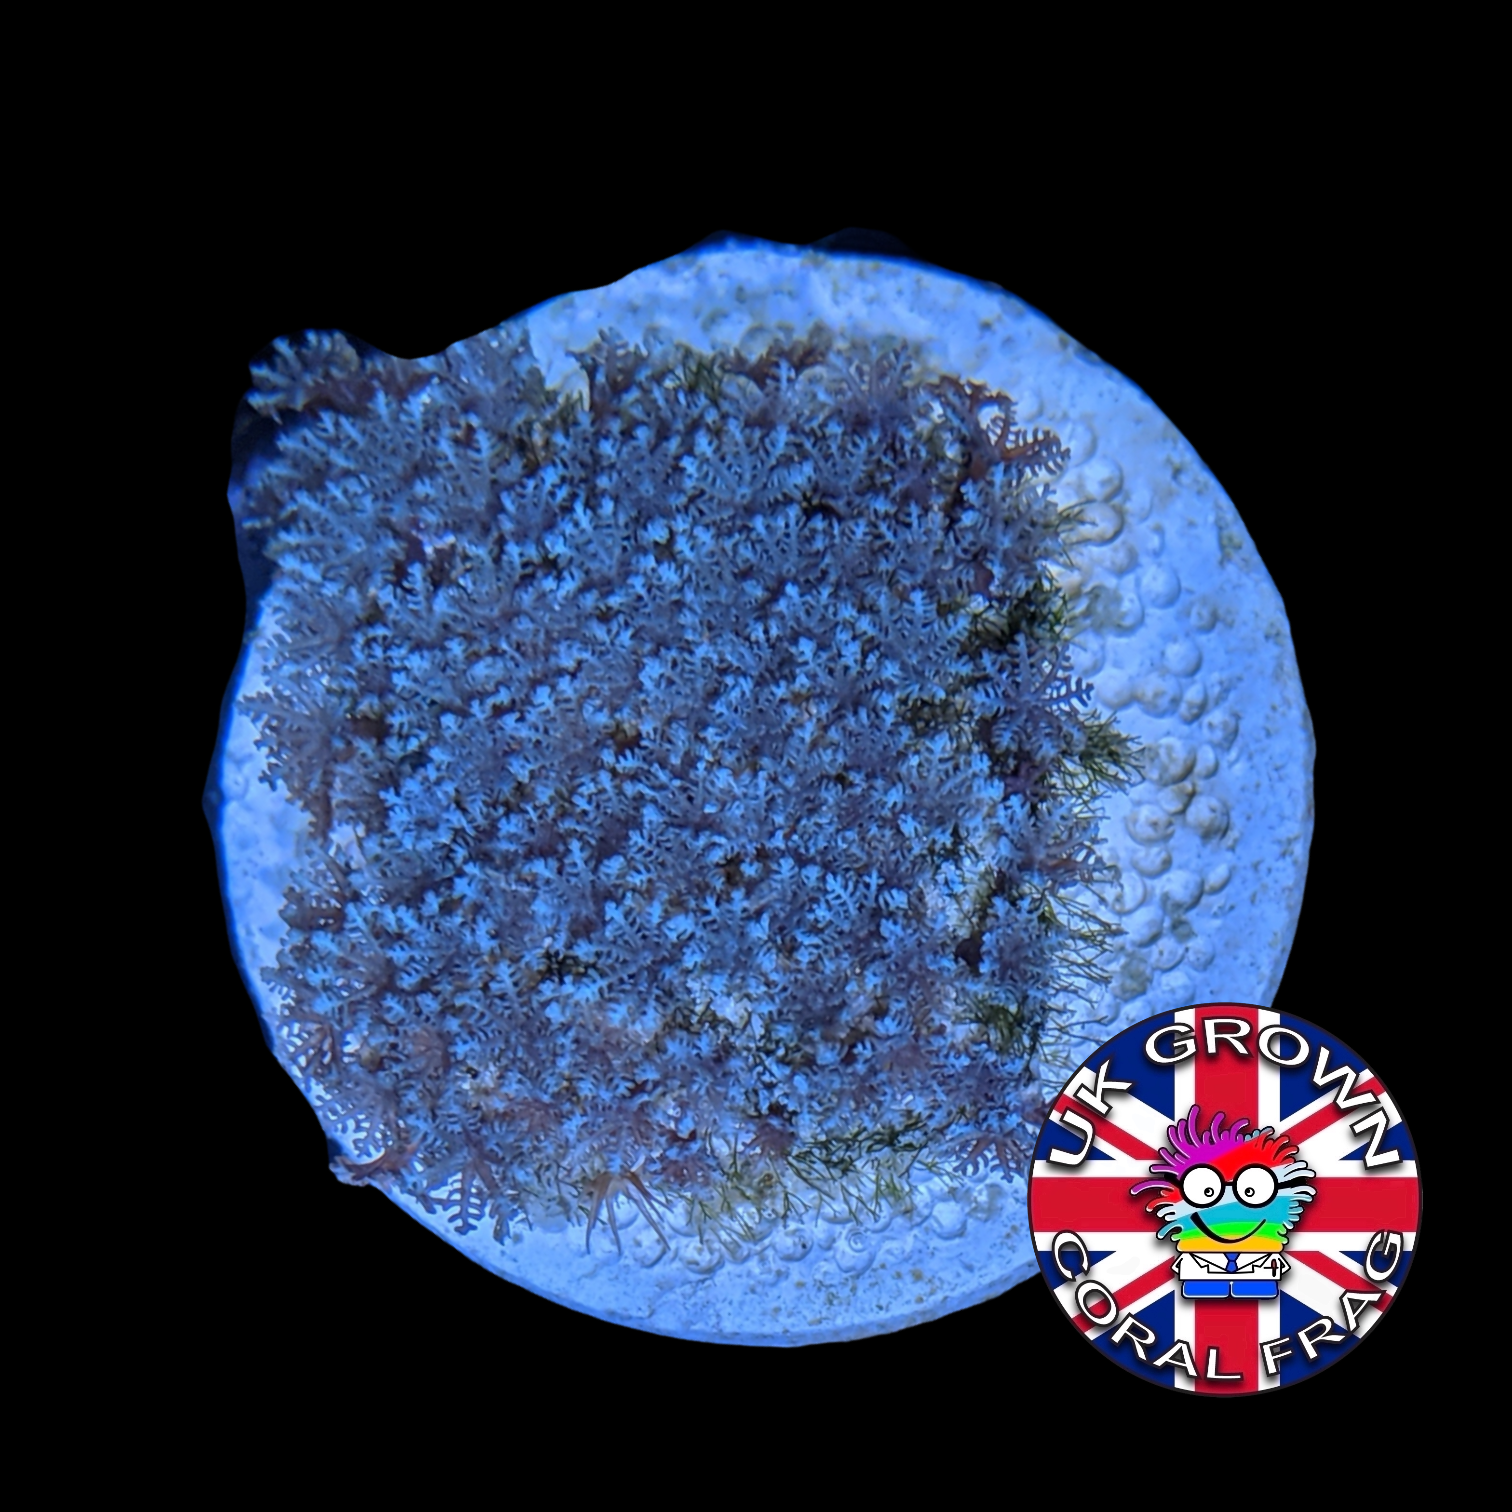 Rare Blue Star Polyps (UK Grown)